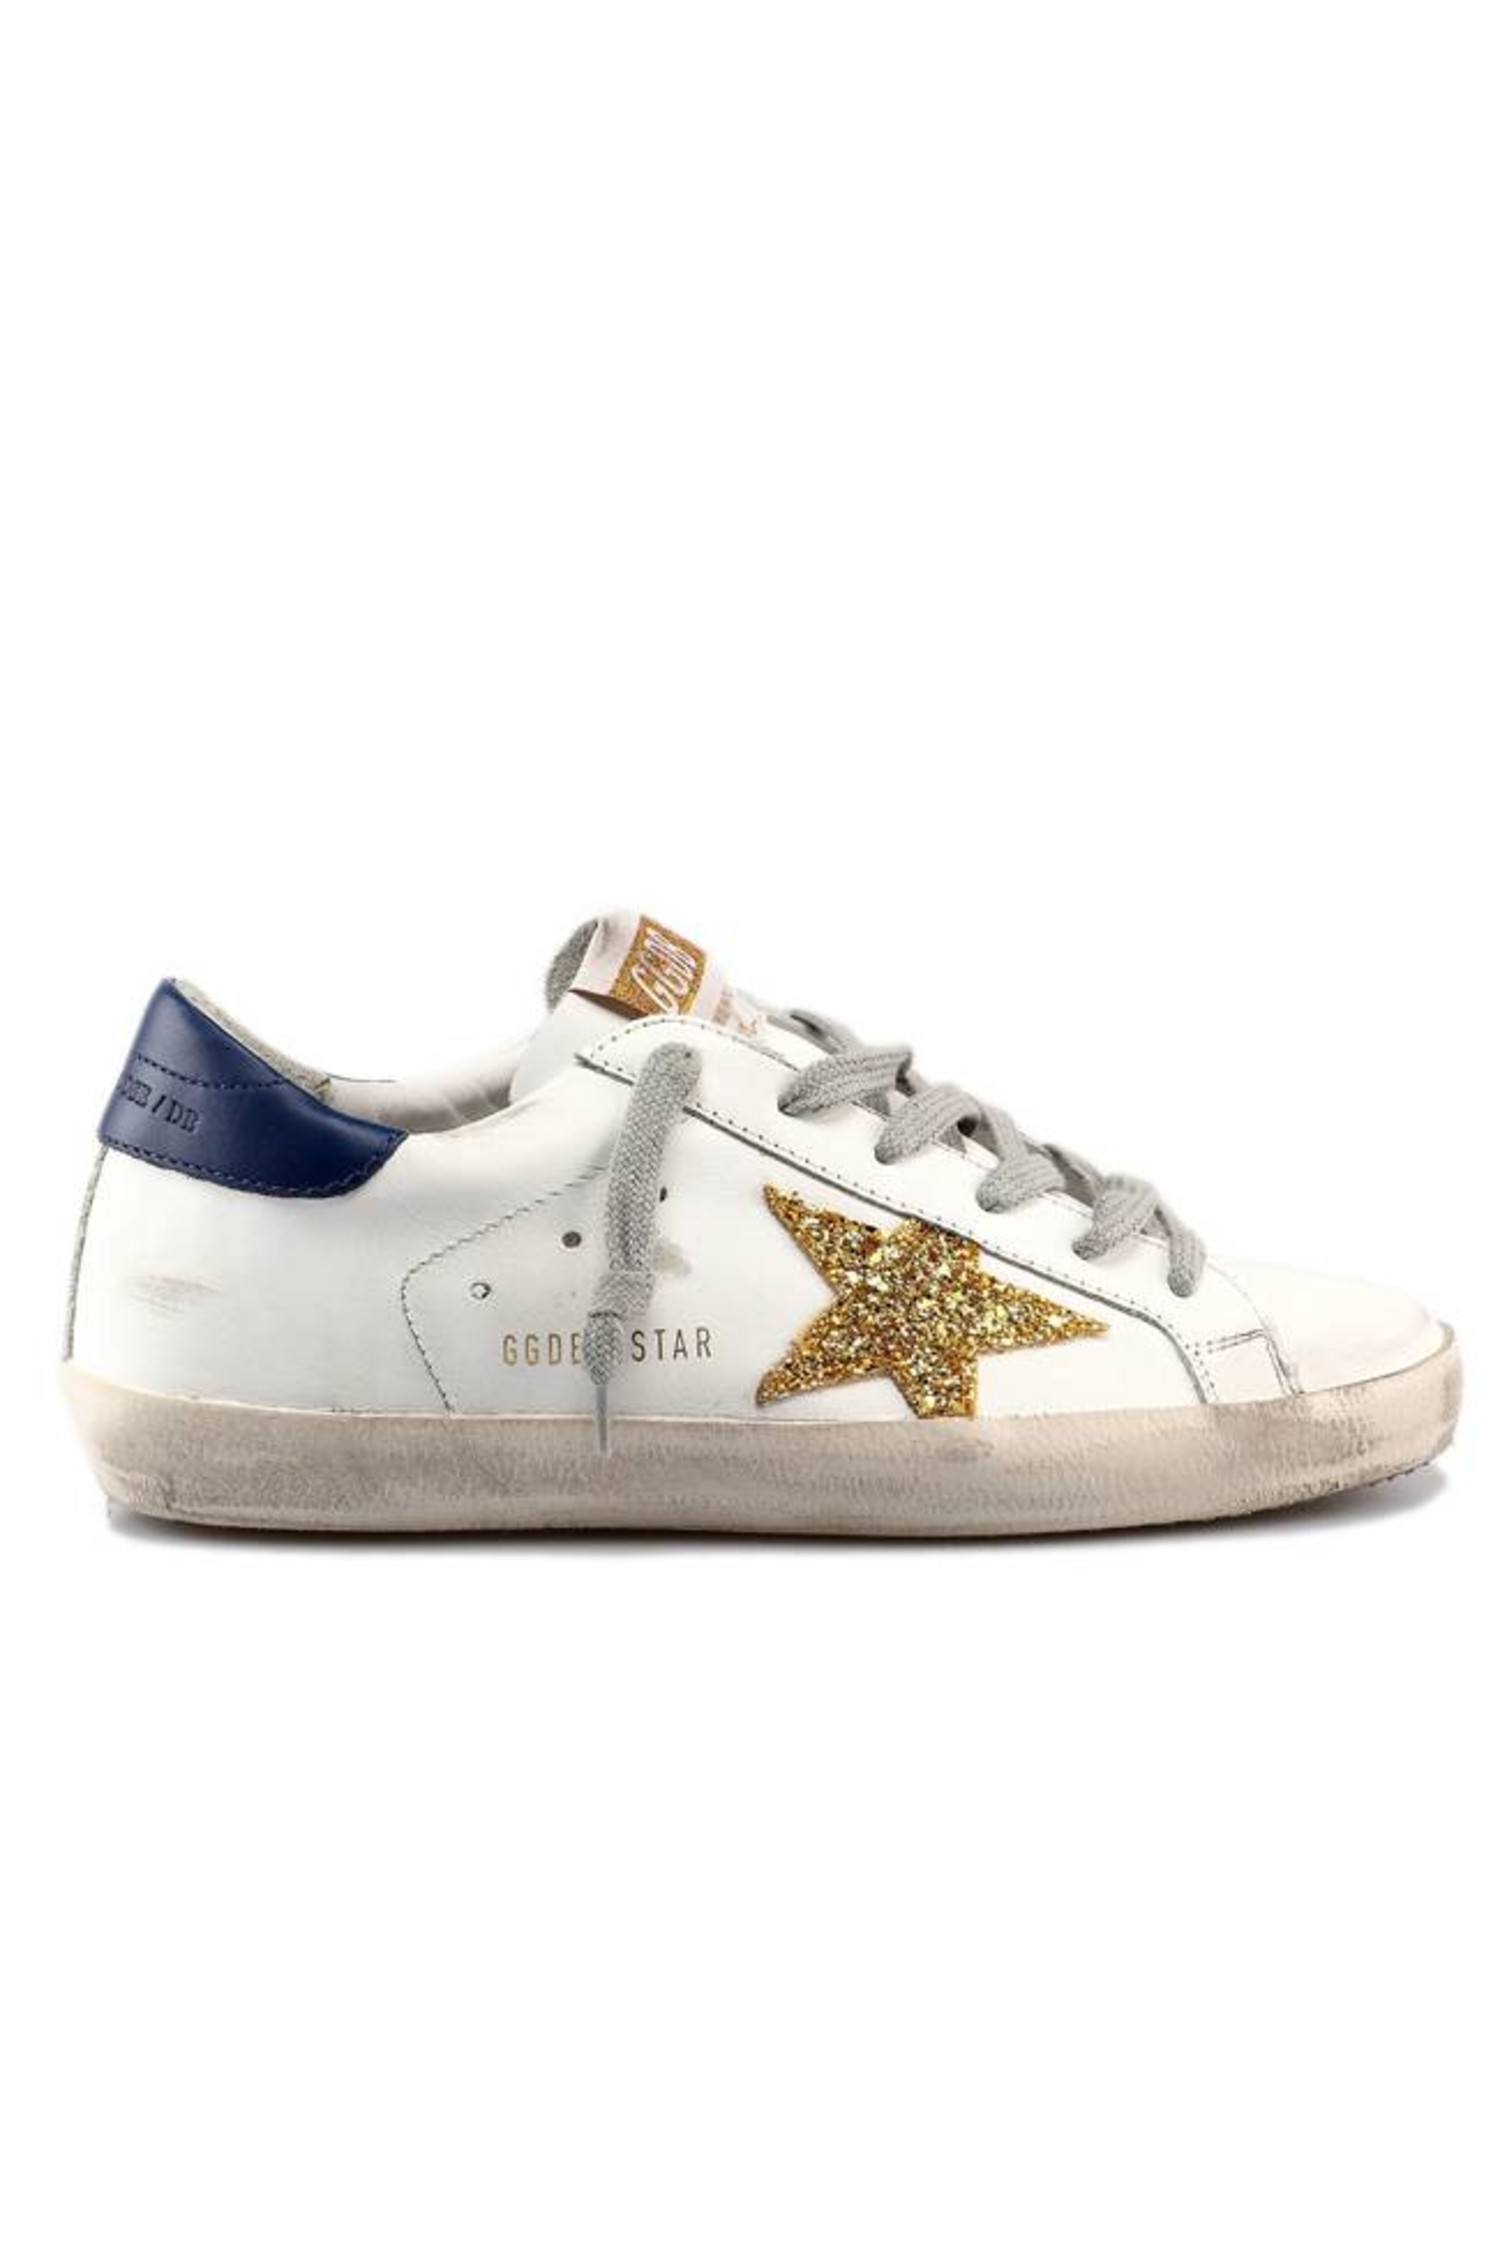 golden goose sneakers gold star